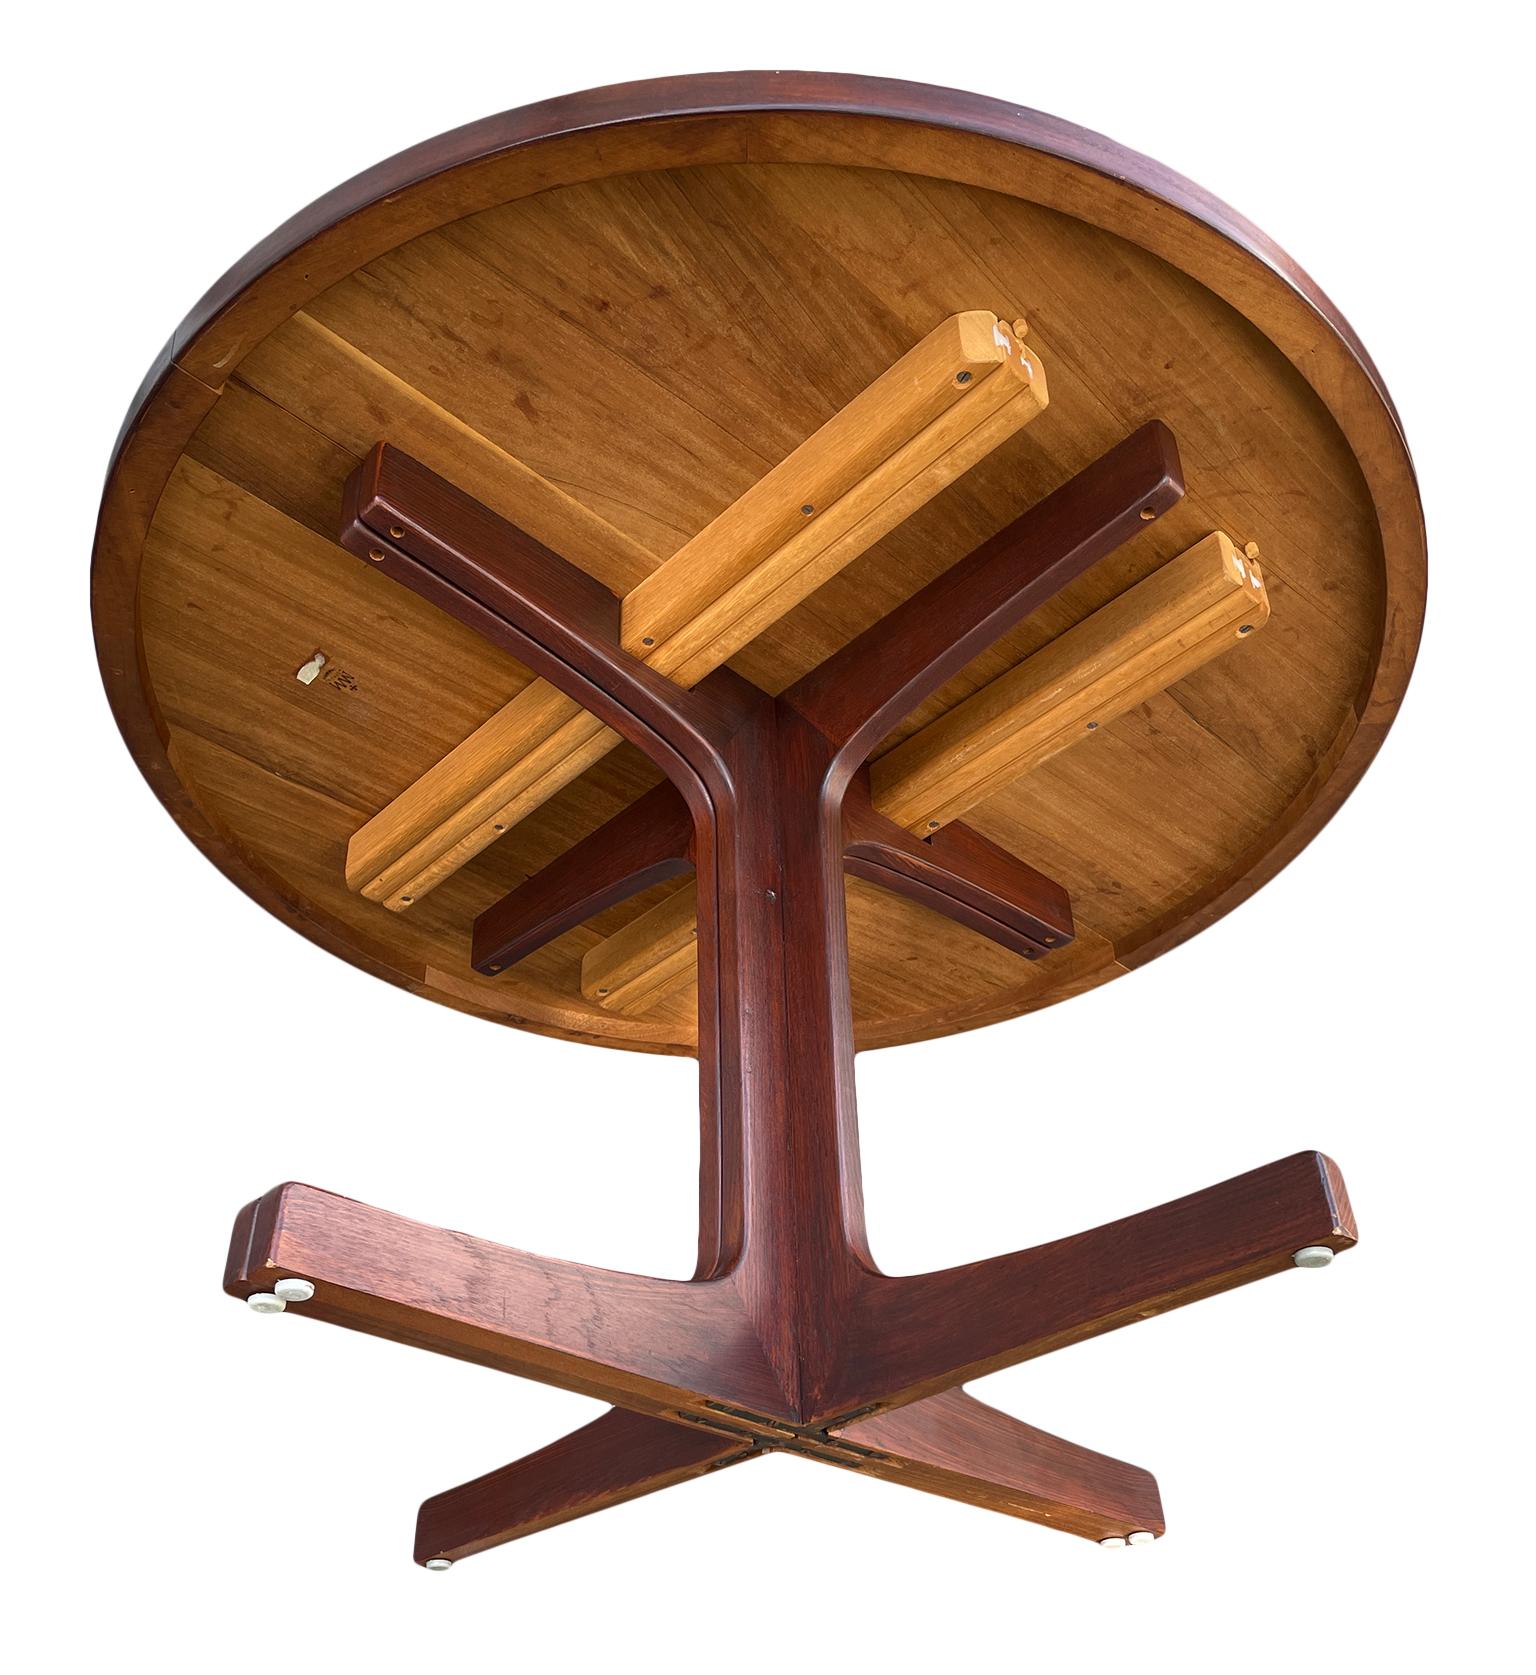 Woodwork Midcentury Round Teak Danish Modern Extension Dining Table 2 Leaves by Moreddi